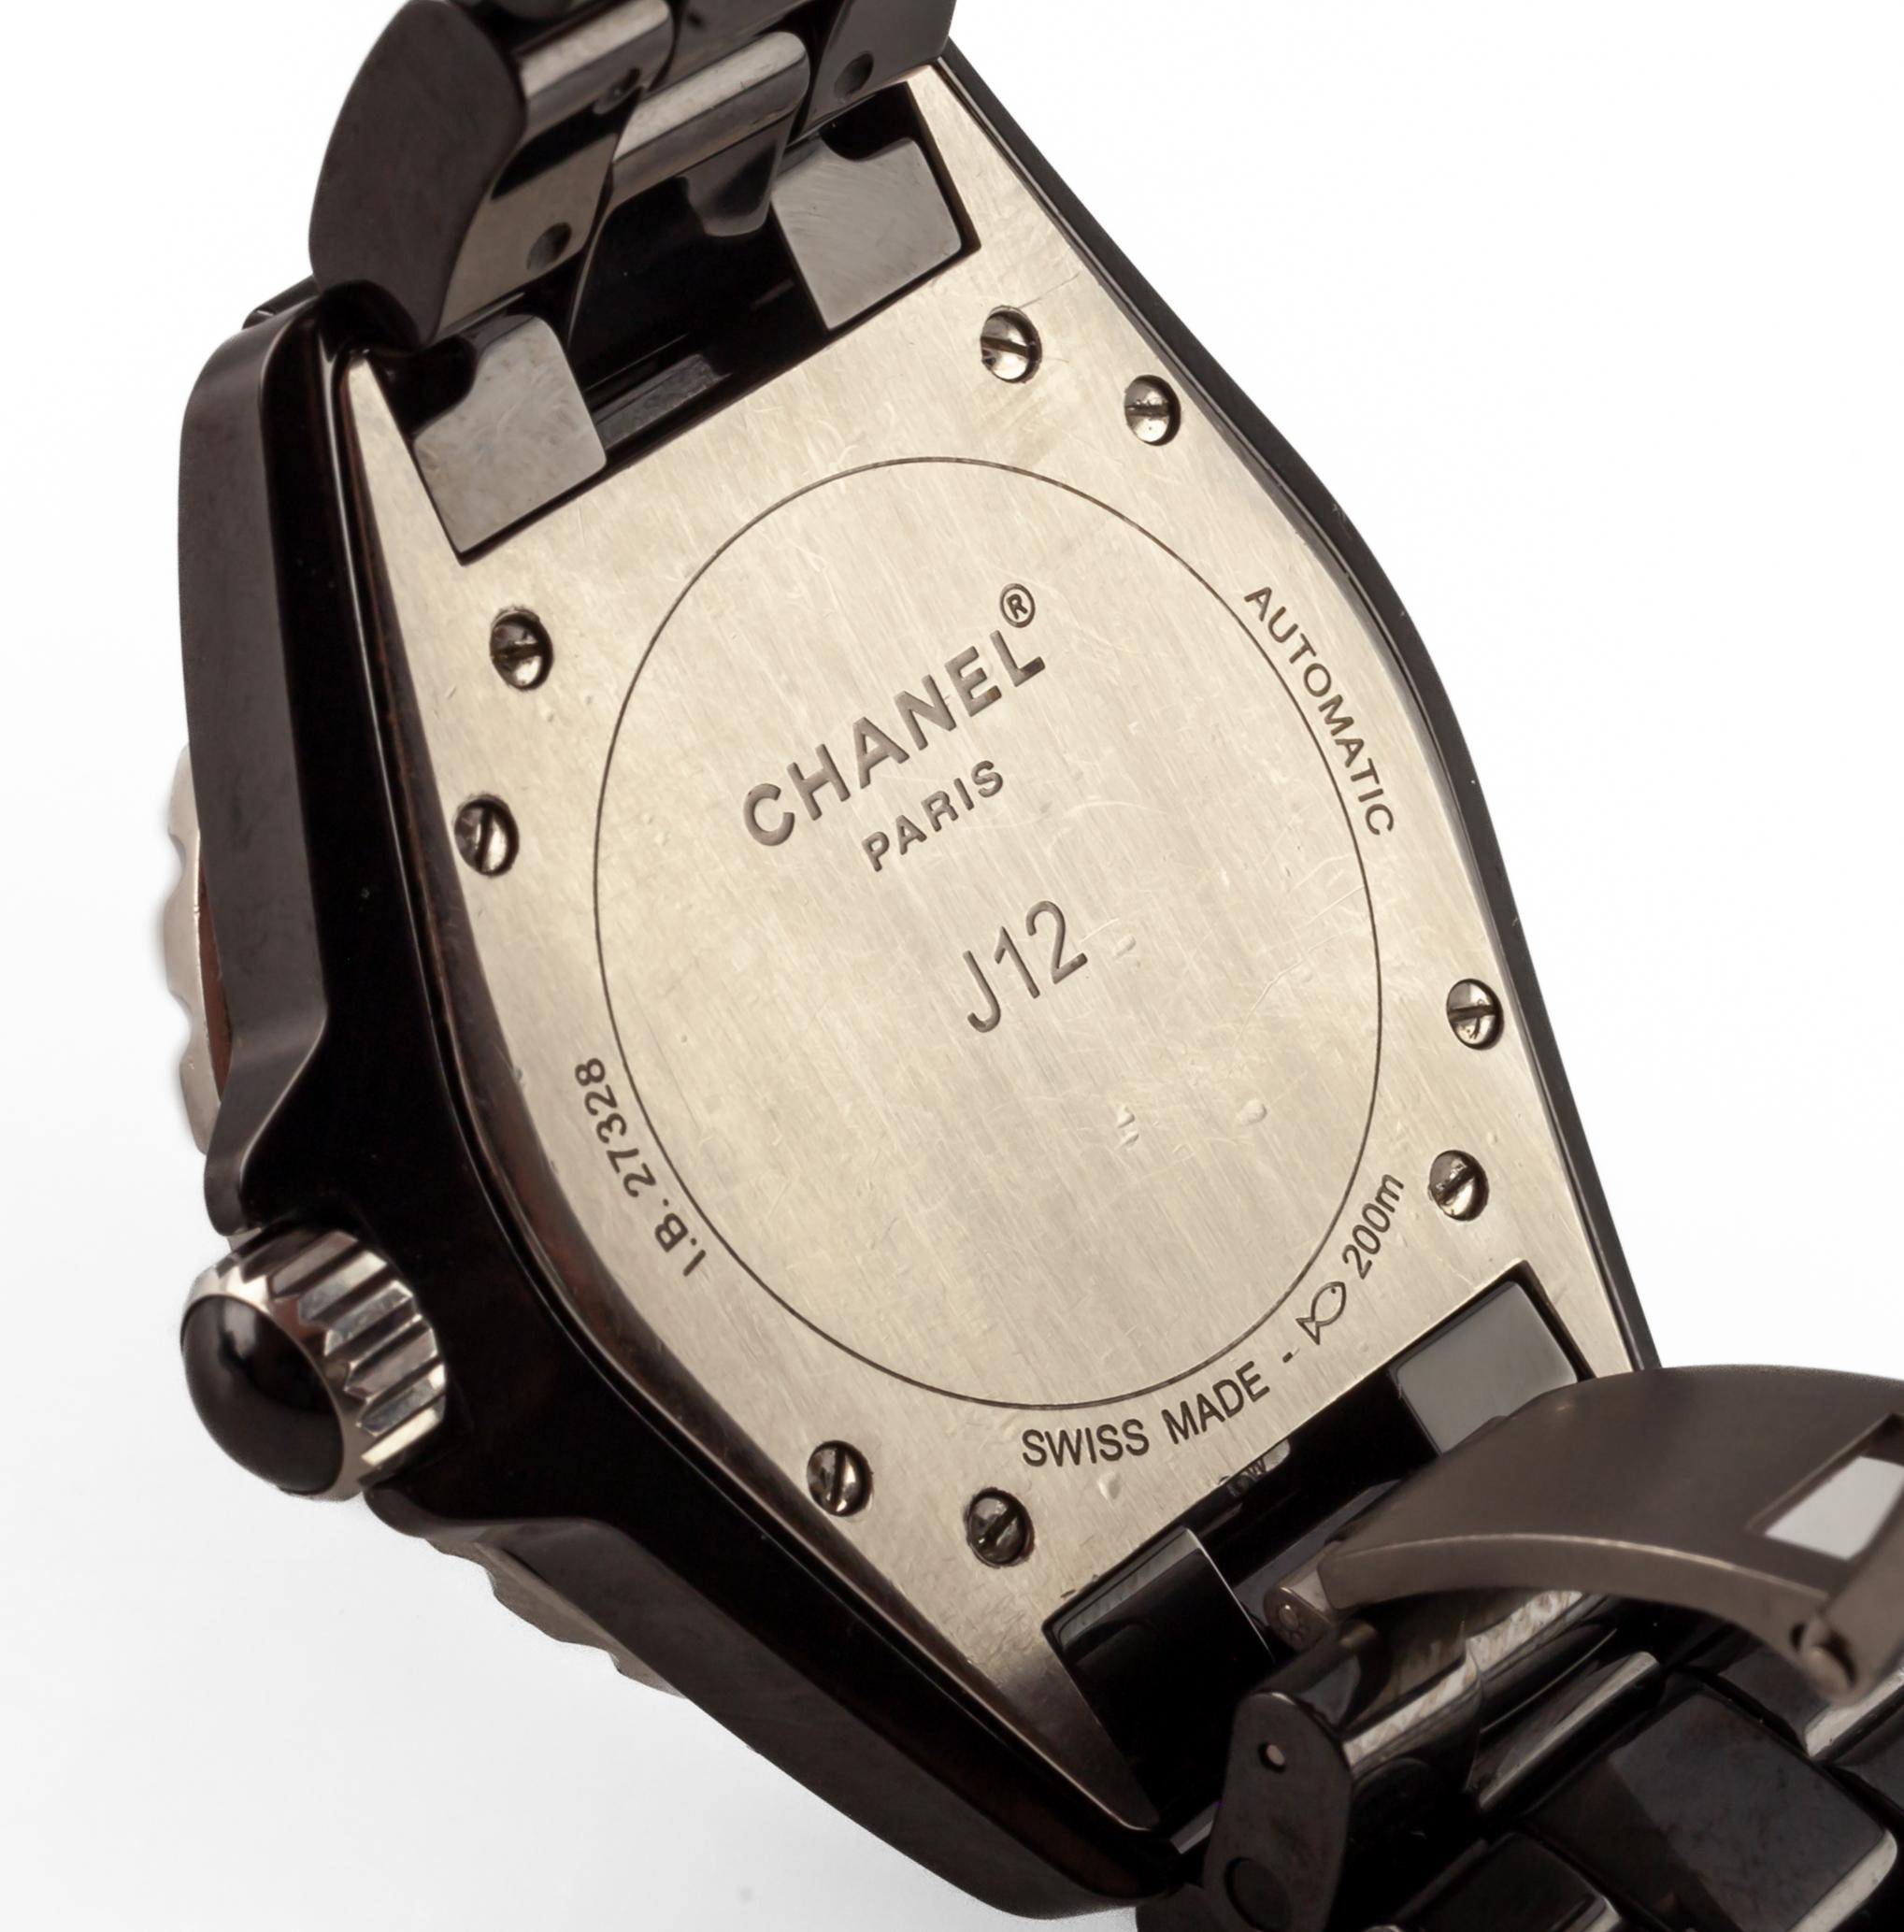 Chanel Ceramic Automatic Watch Diamond Bezel 38 mm H0950
Model #H0950
Serial #J12 IB27328
Movement #2892A
Black Round Ceramic Case w/ Double Row Diamond Bezel
38 mm in Diameter (42 mm w/ Crown)
Lug-to-Lug Distance = 45 mm
Lug-to-Lug Width = 19